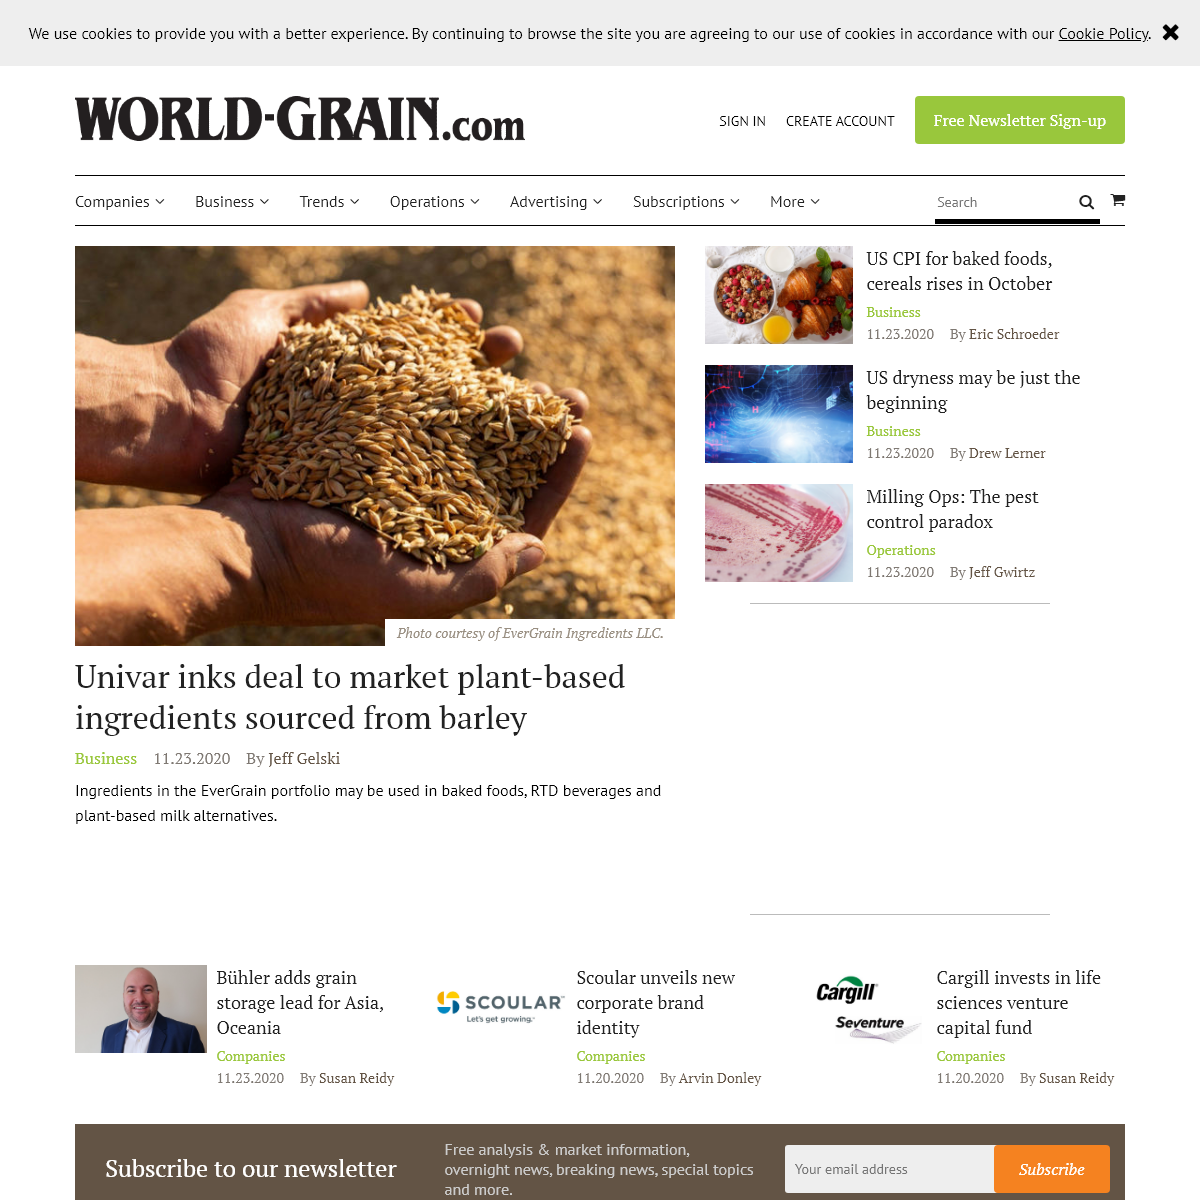 A complete backup of world-grain.com